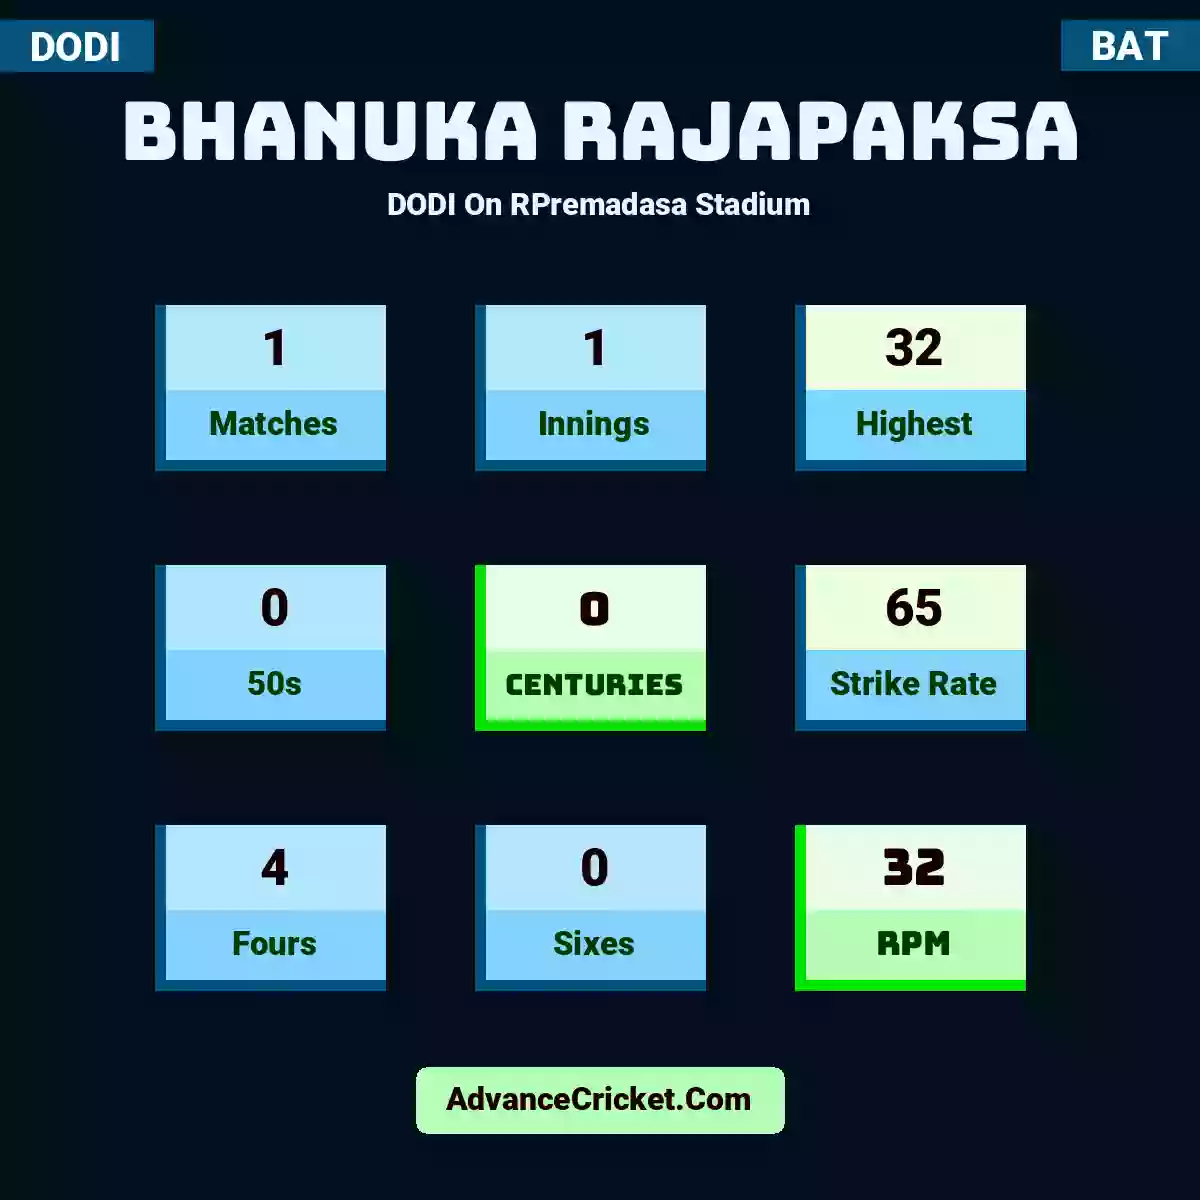 Bhanuka Rajapaksa DODI  On RPremadasa Stadium, Bhanuka Rajapaksa played 1 matches, scored 32 runs as highest, 0 half-centuries, and 0 centuries, with a strike rate of 65. B.Rajapaksa hit 4 fours and 0 sixes, with an RPM of 32.